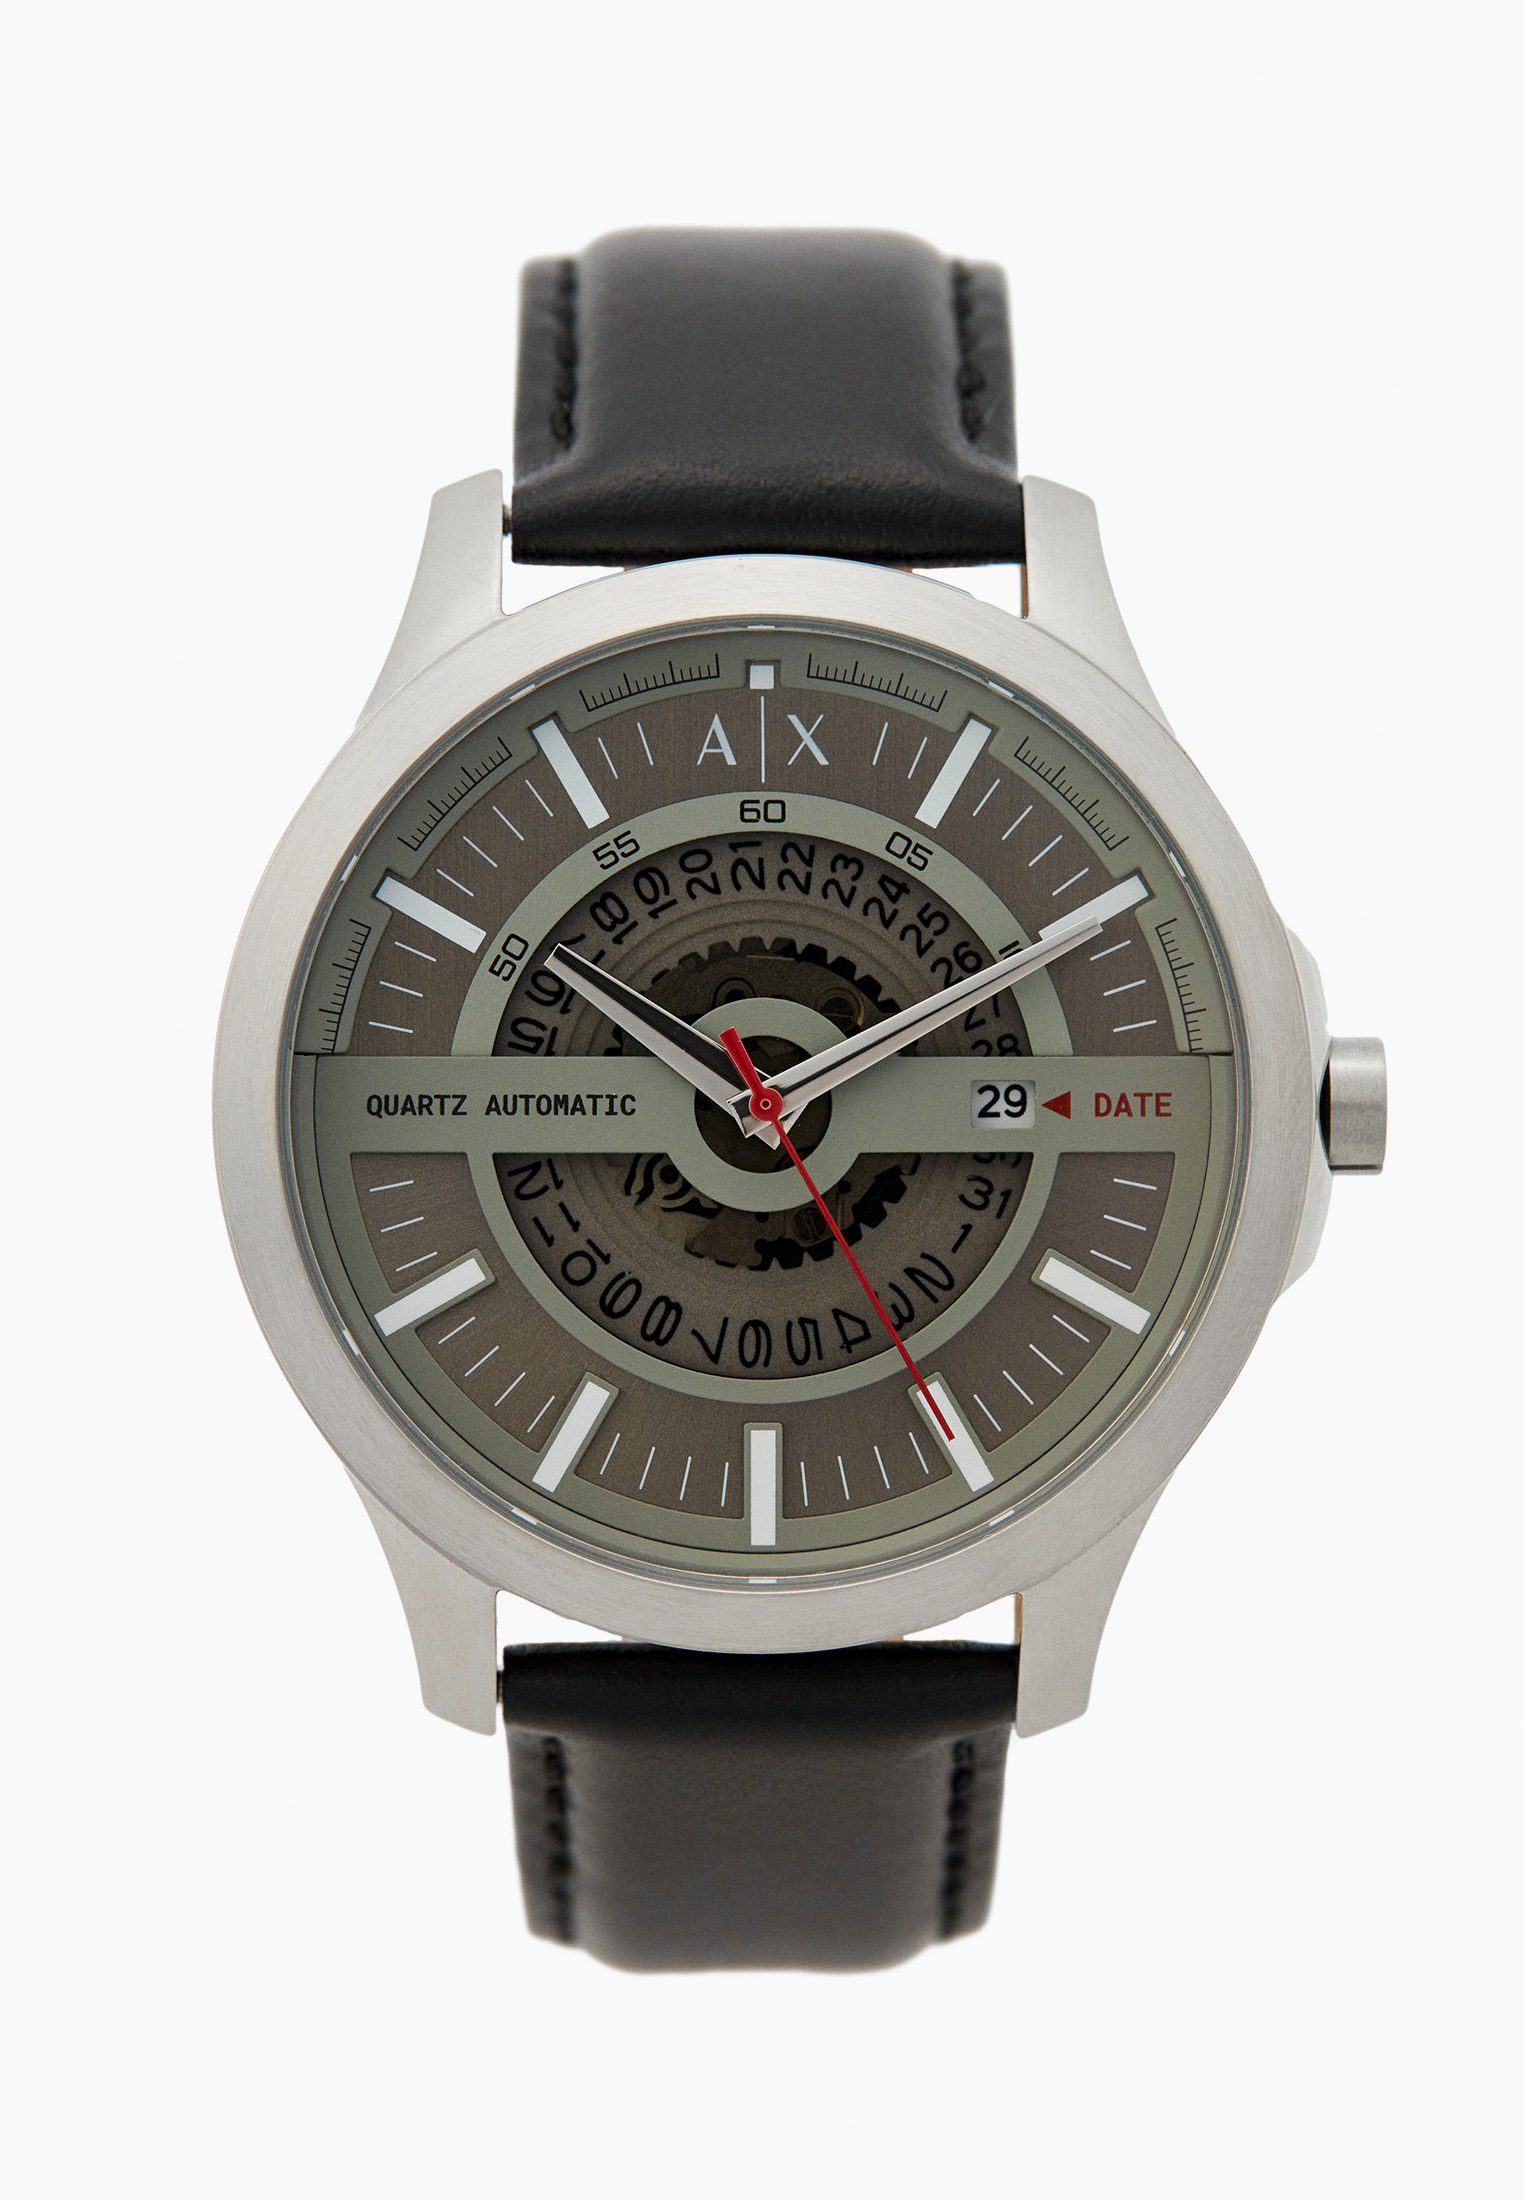 Мужские часы Armani Exchange AX2445